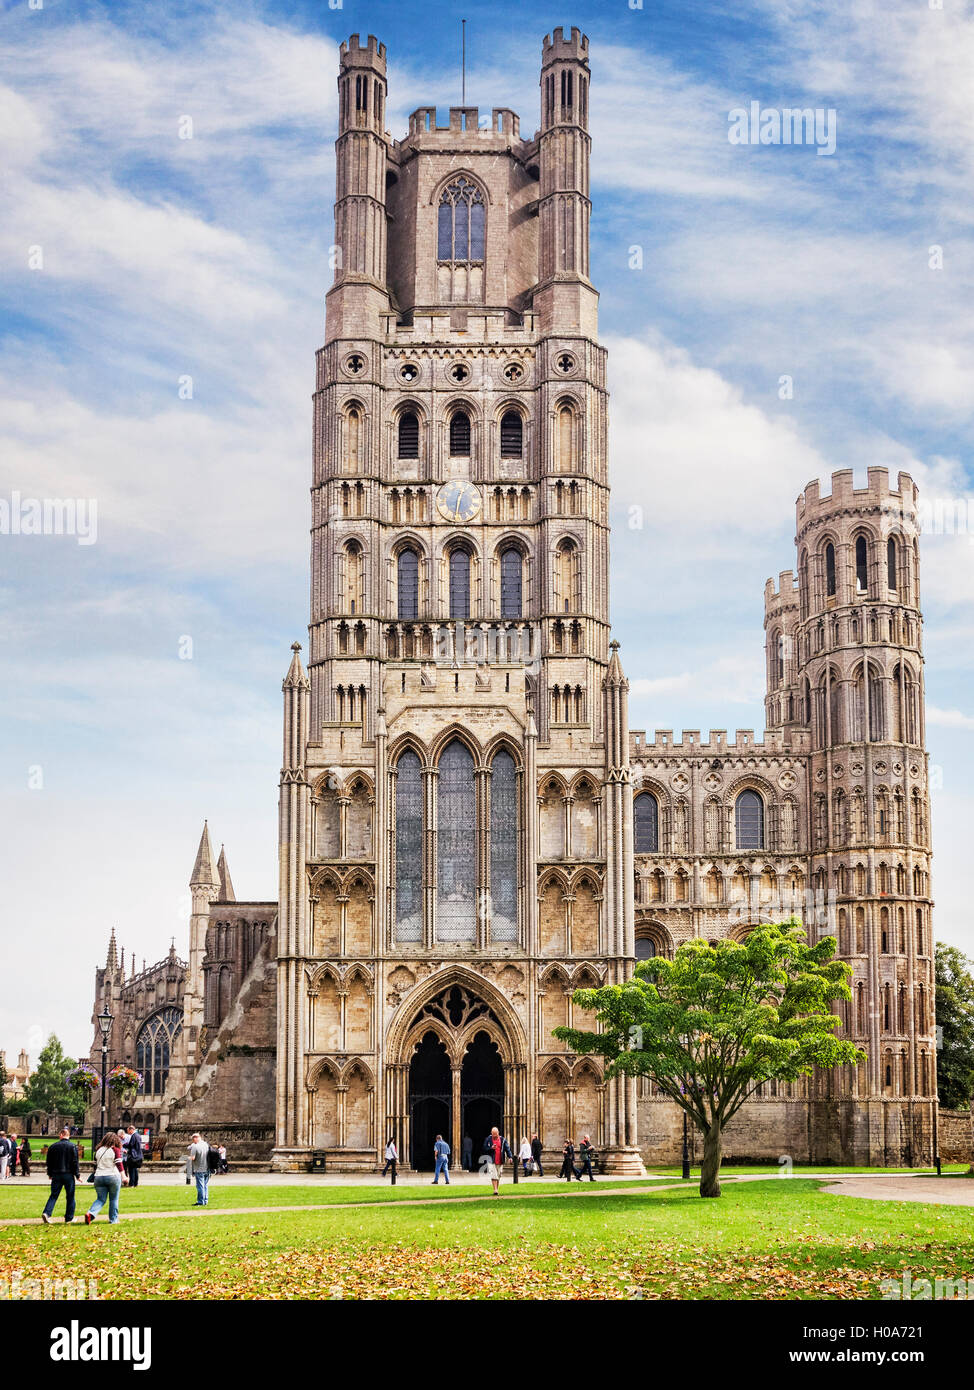 Westfassade der Kathedrale von Ely, Cambridgeshire, England, UK Stockfoto